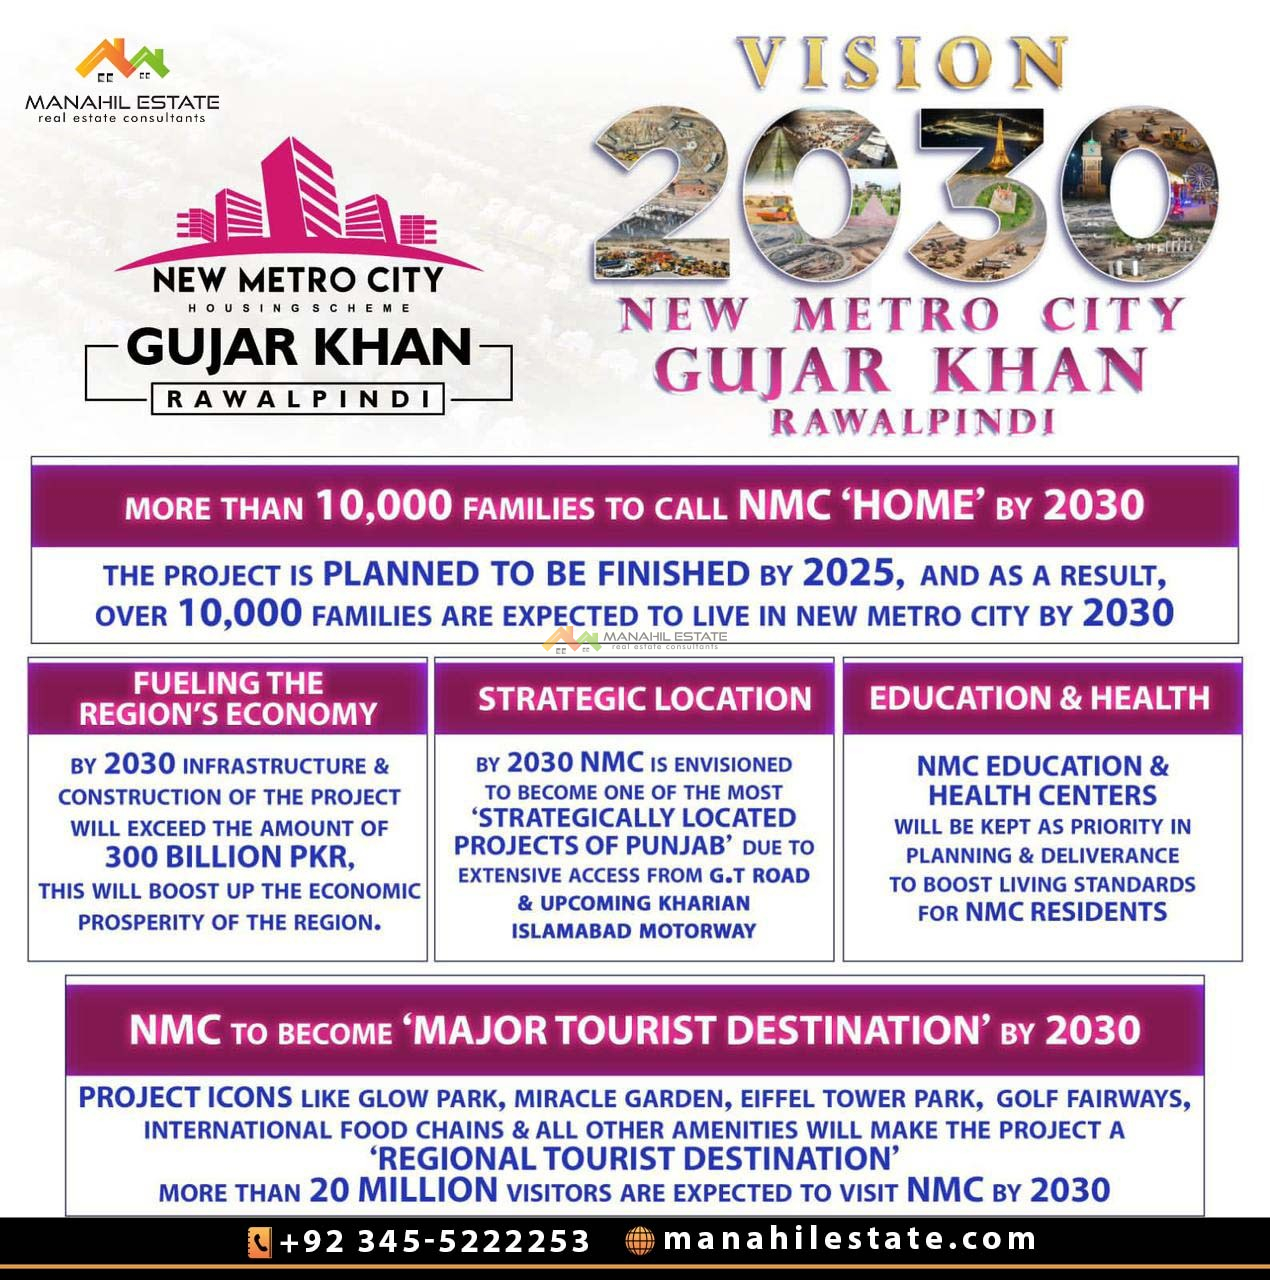 New Metro City Gujar Khan Vision 2030